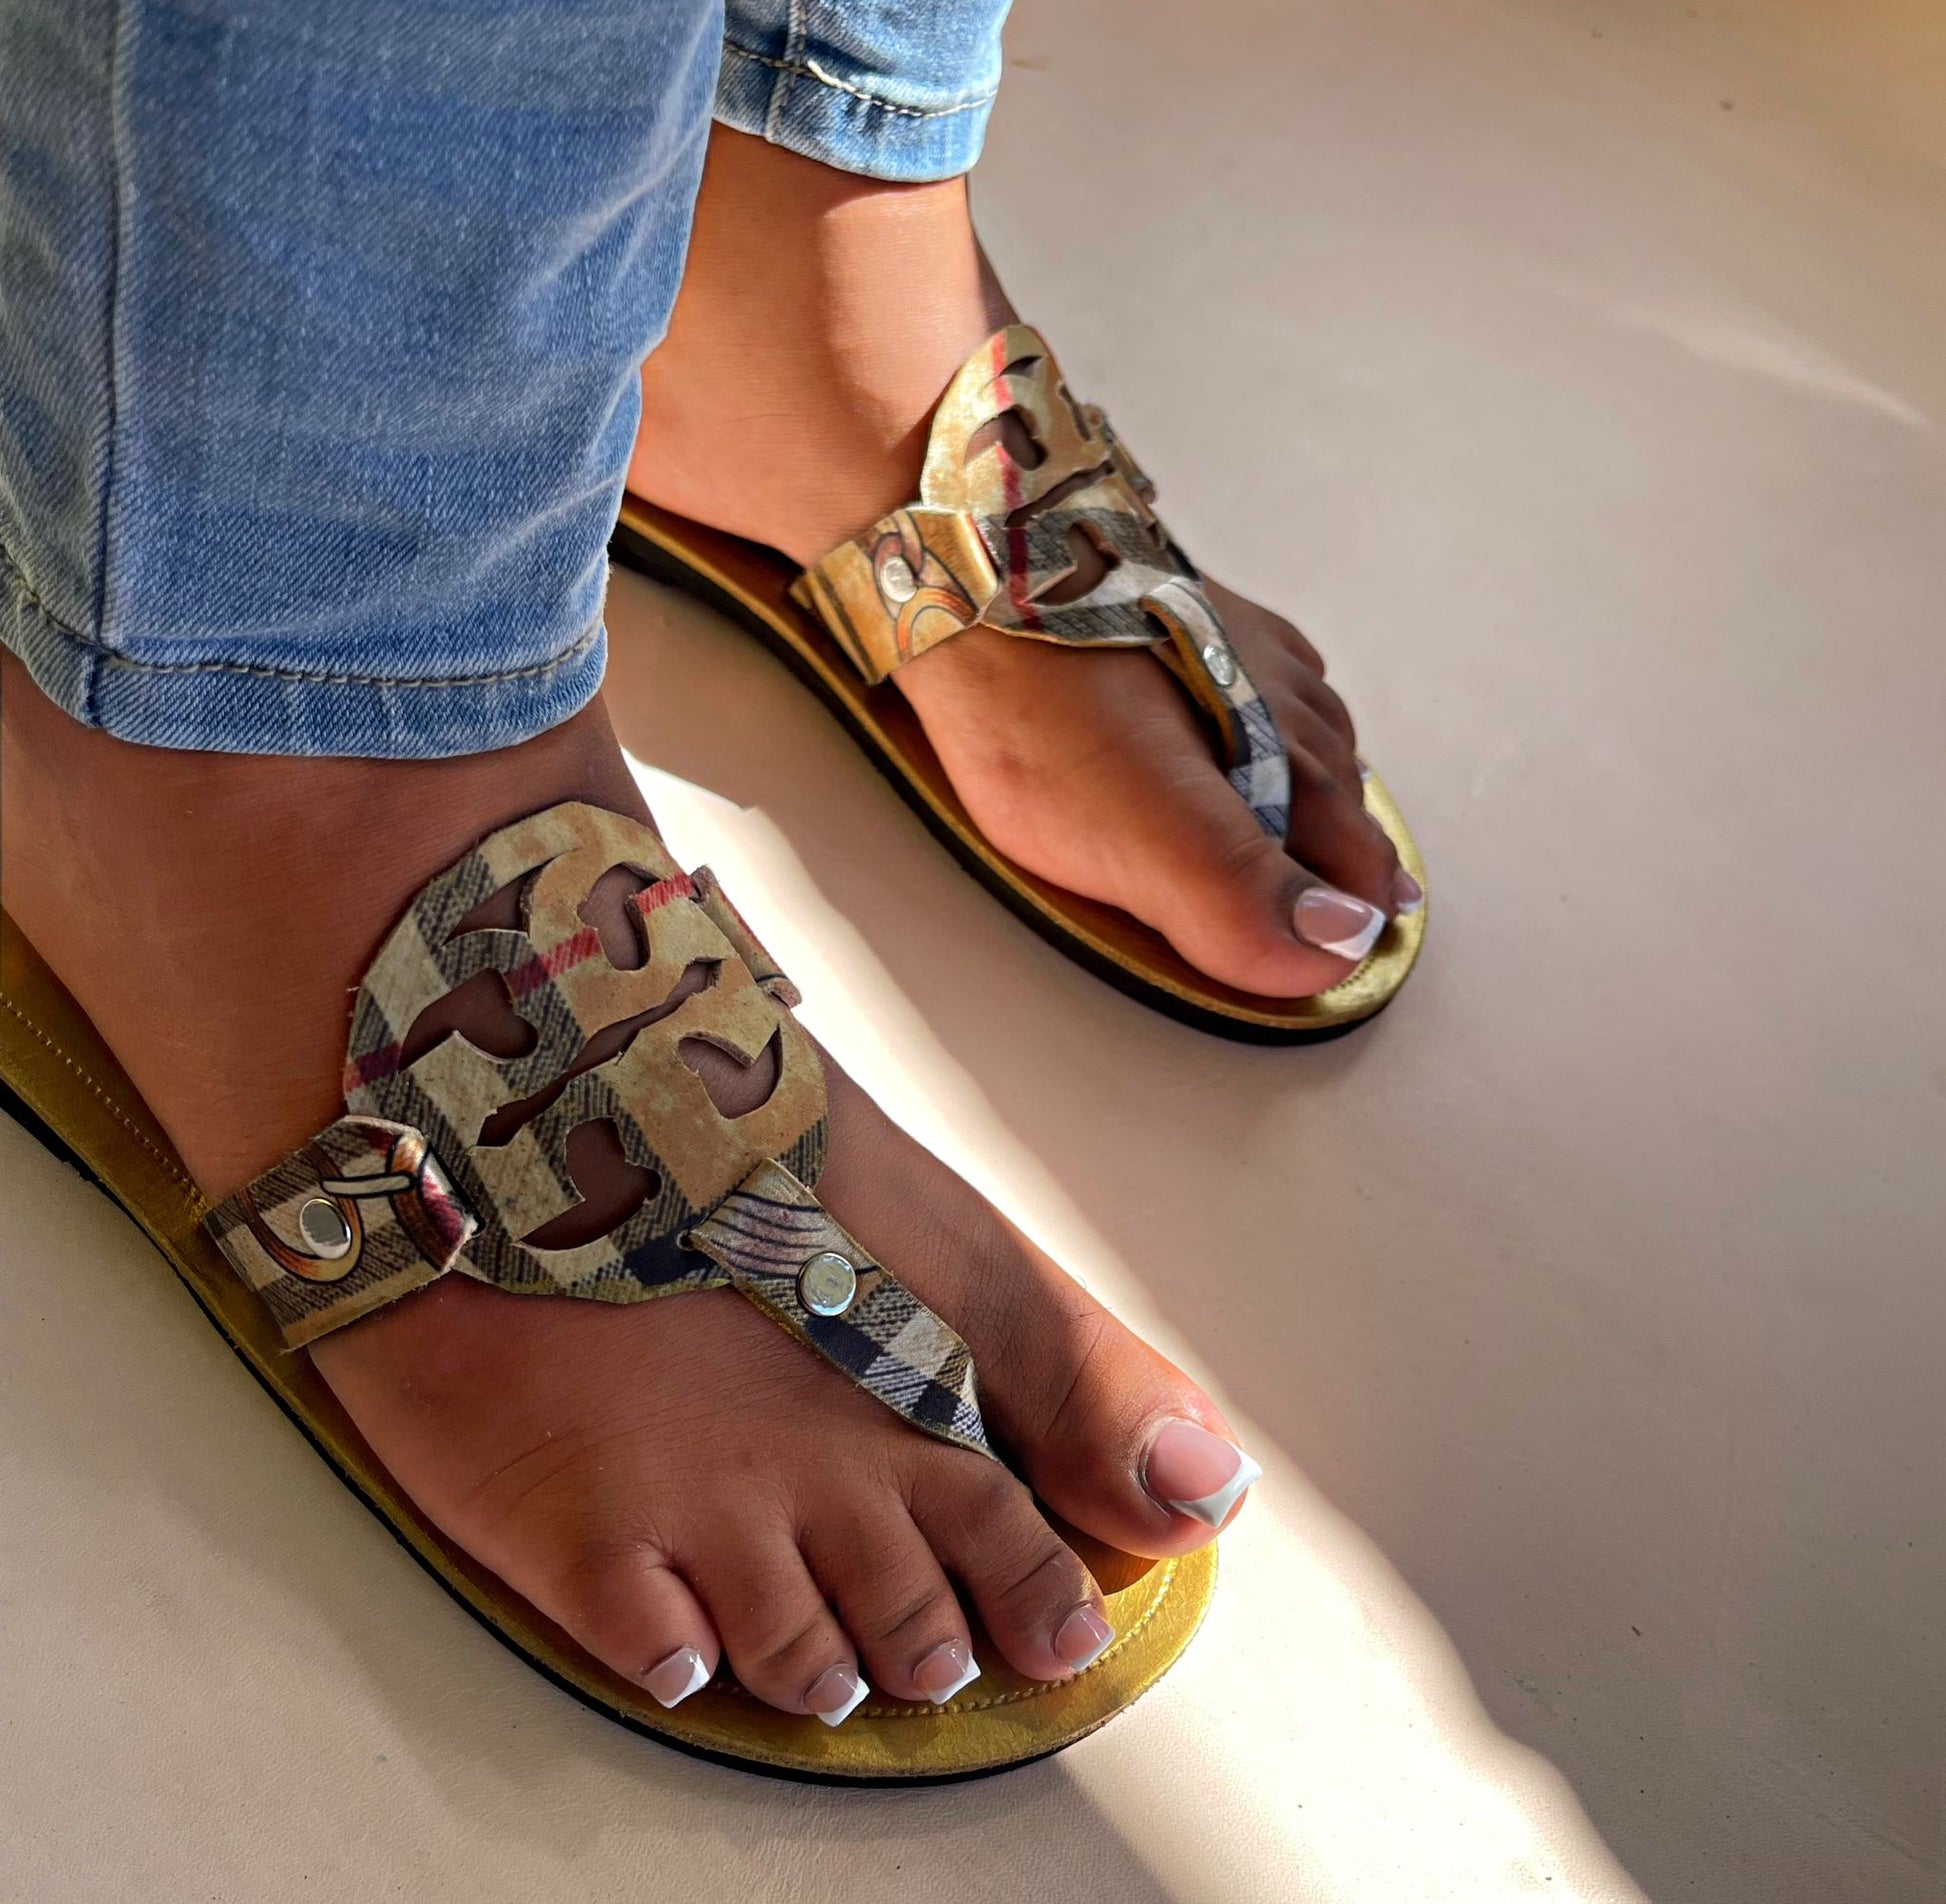 Women Camron's Sandals | Women Leather Sandals | Buydominicaonline